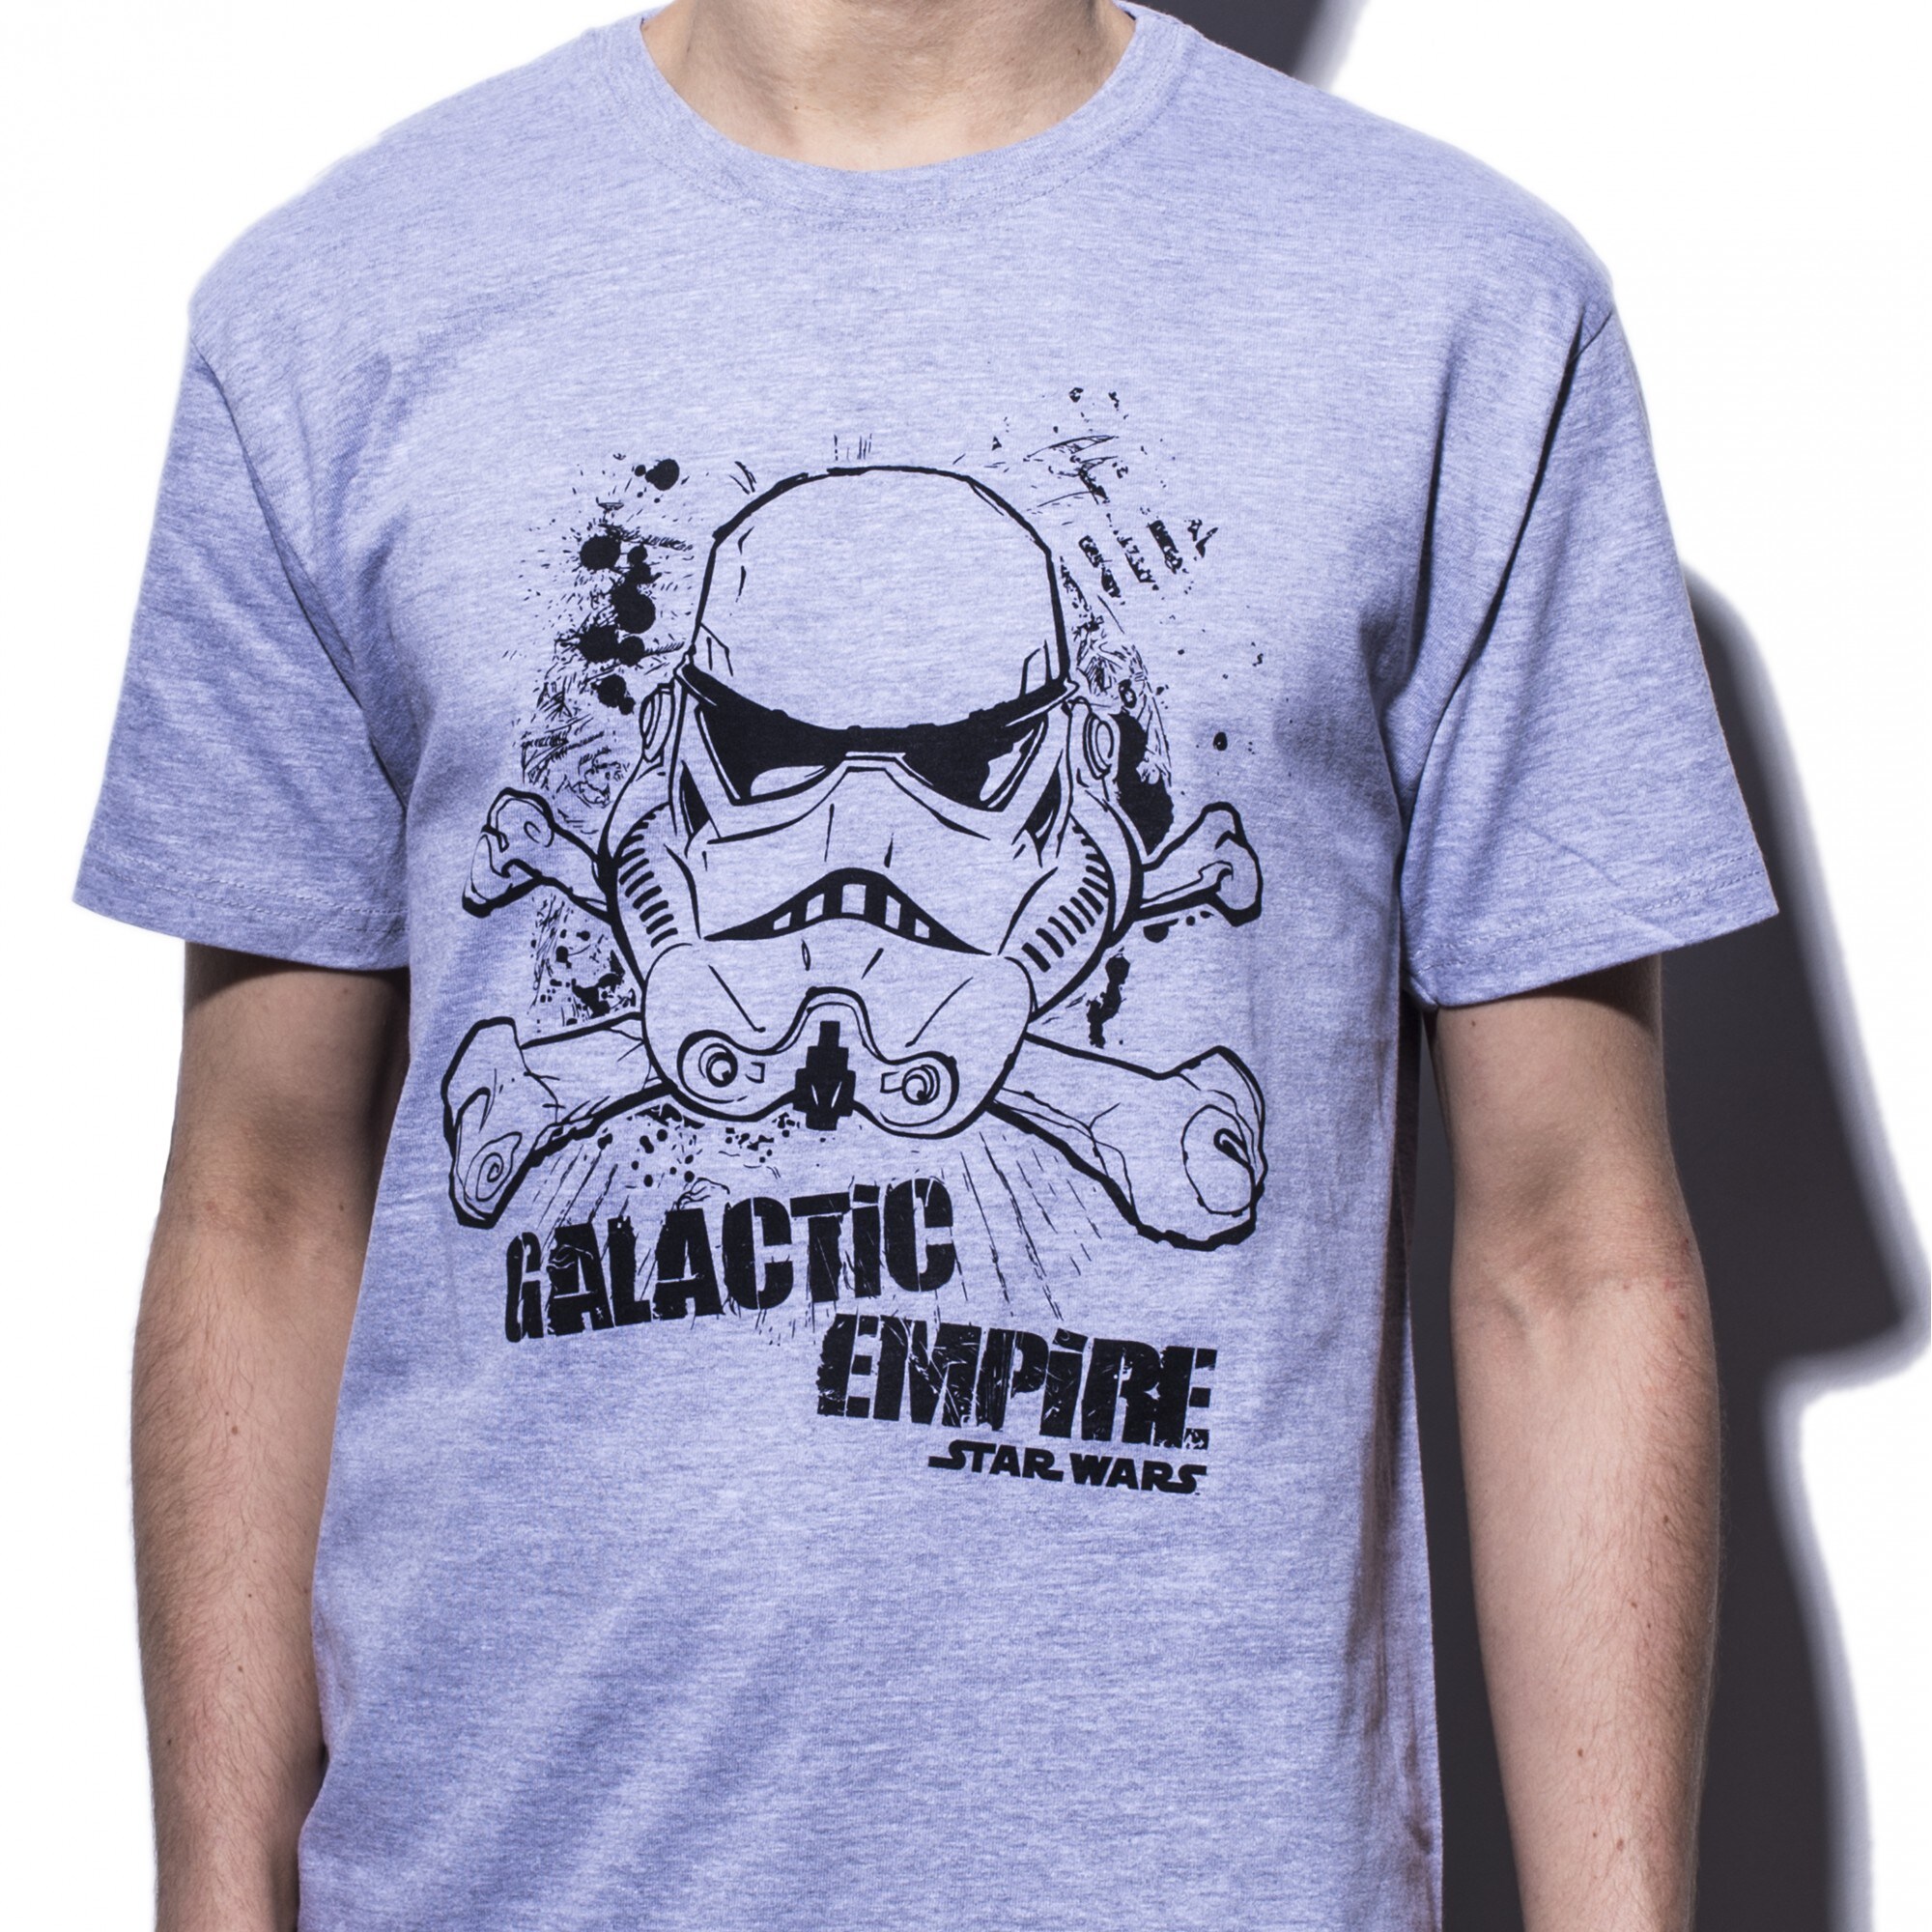 STAR WARS - Tshirt "Galactic Empire" man SS sport  - basic XL Gray - 1